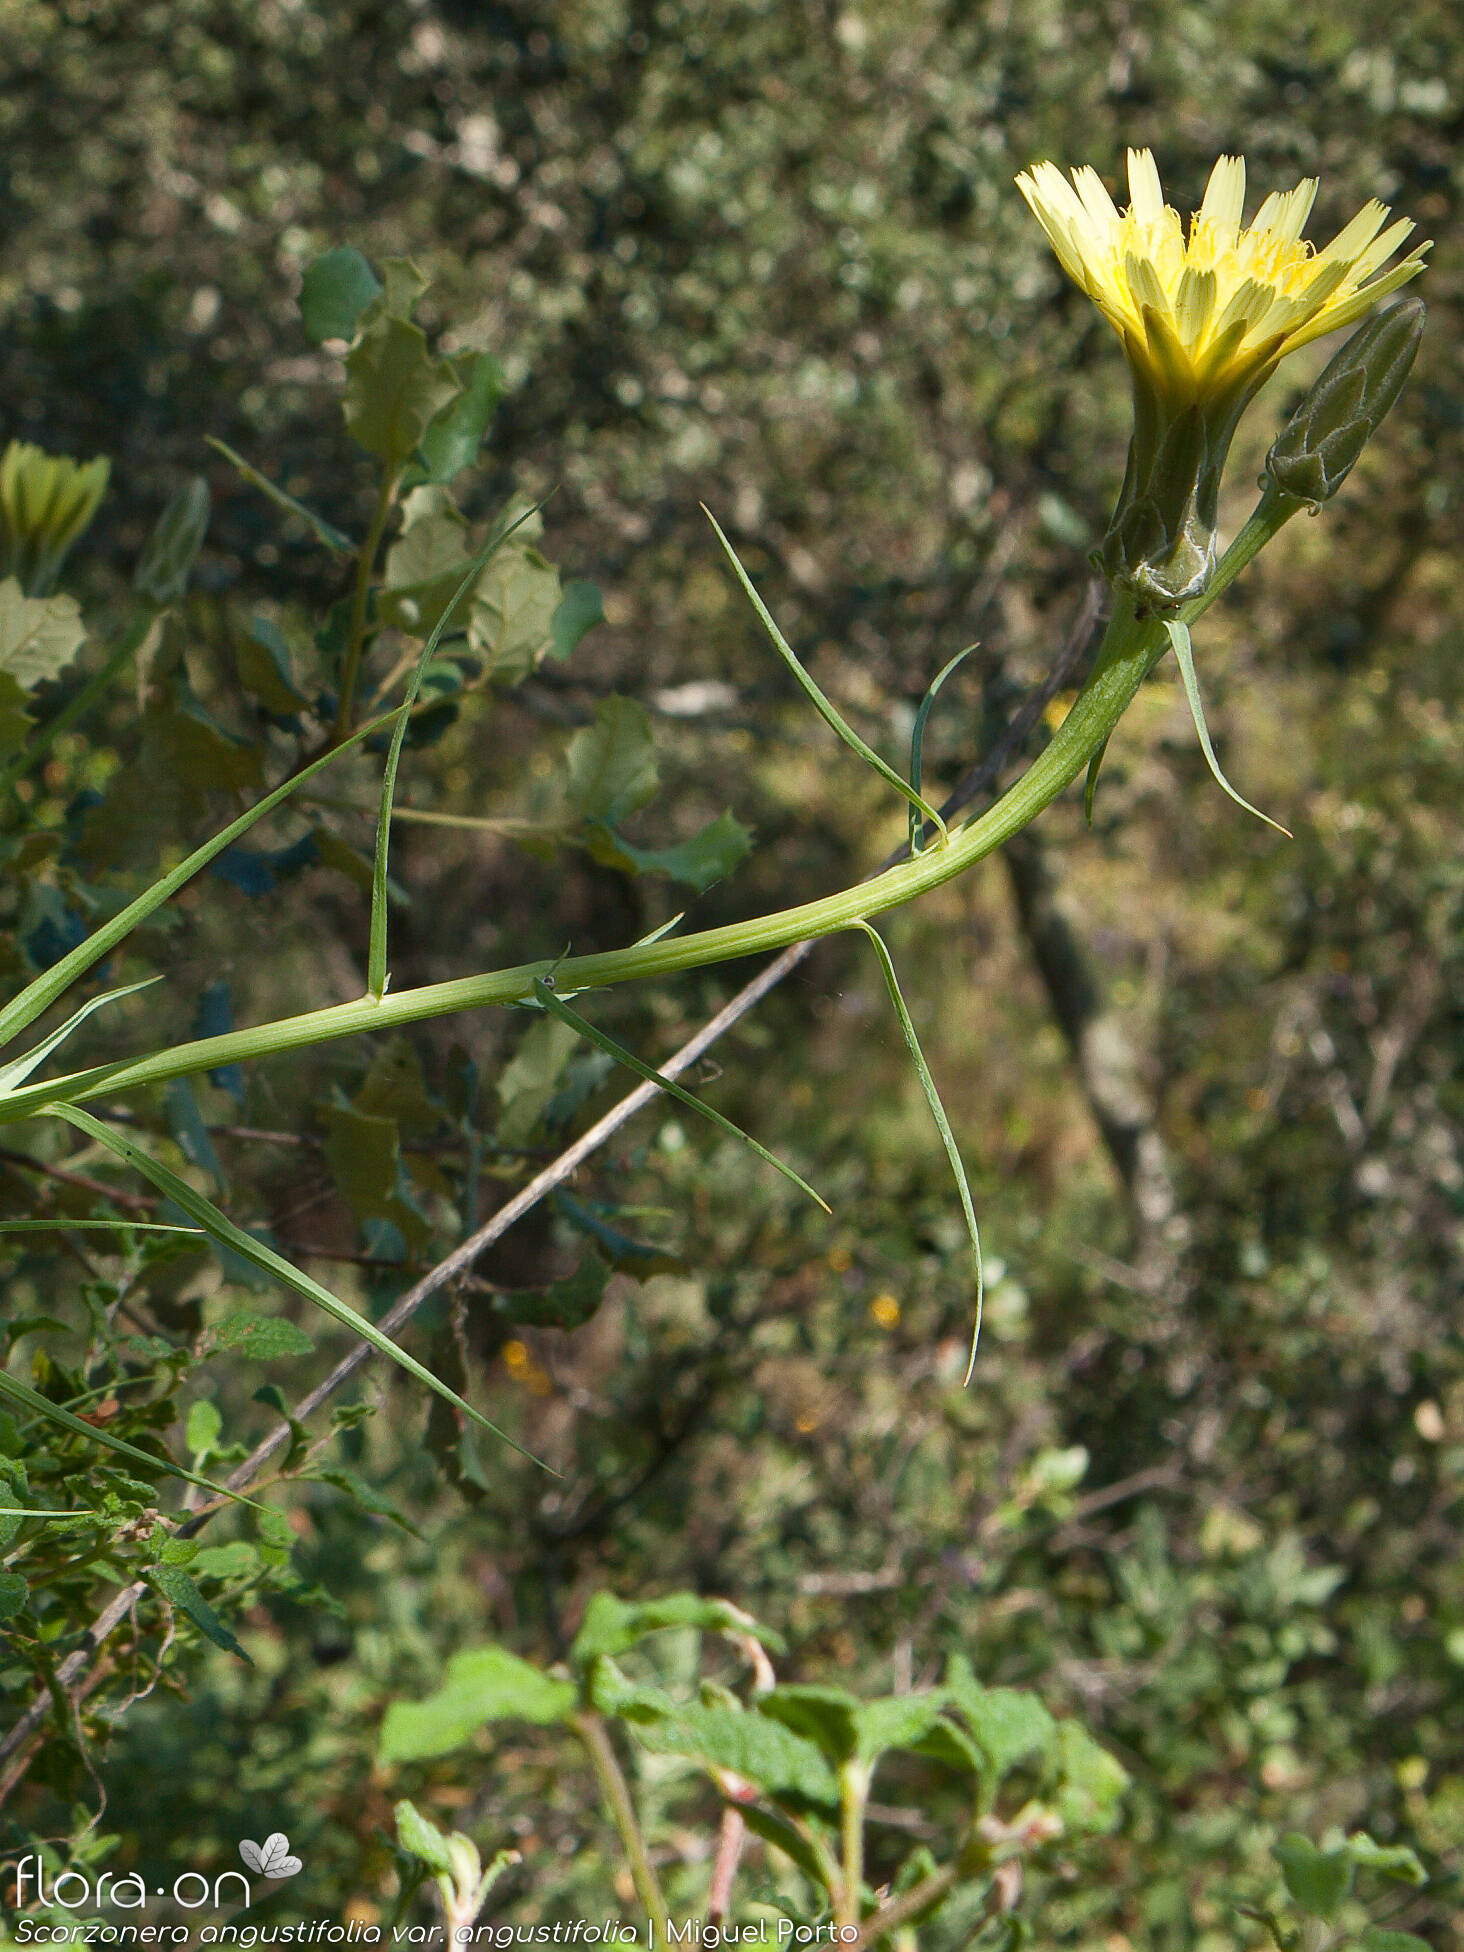 Scorzonera angustifolia angustifolia - Flor (geral) | Miguel Porto; CC BY-NC 4.0